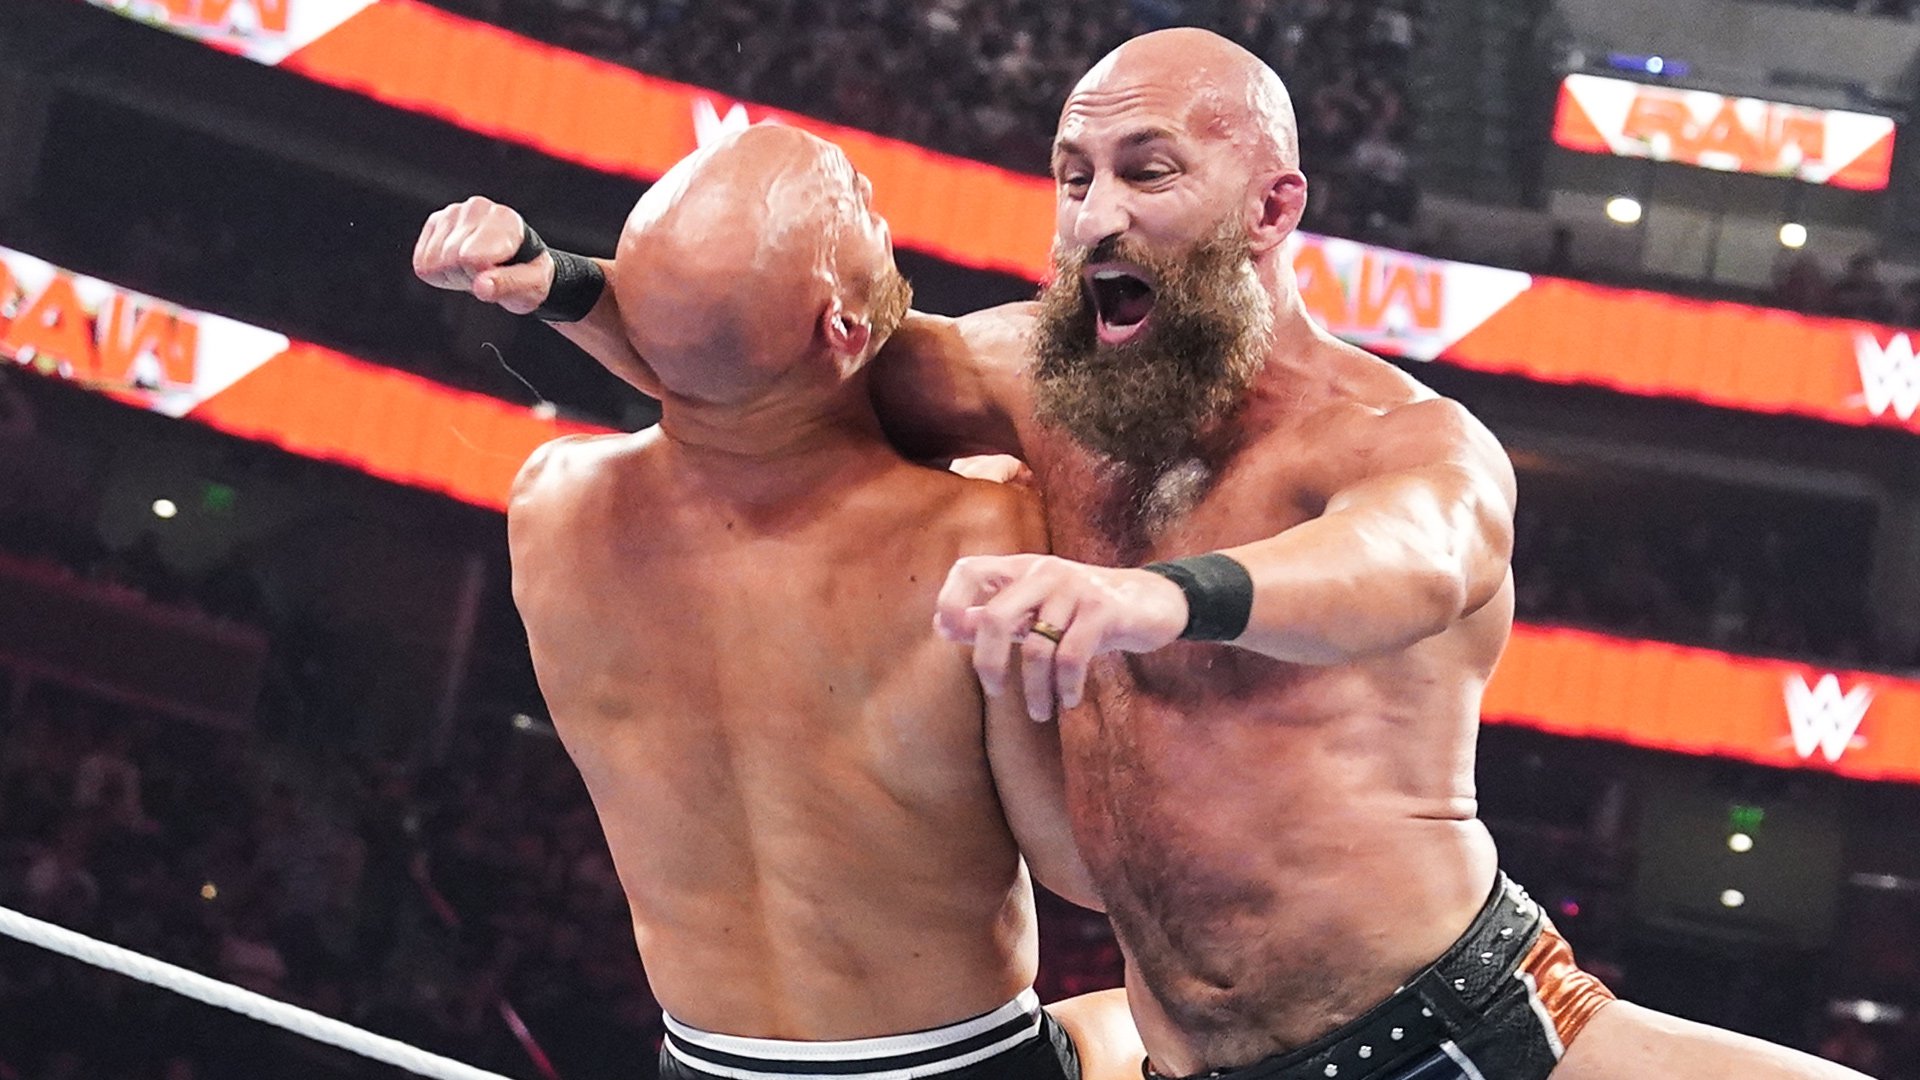 WWE Raw Results, News, Video & Photos | WWE